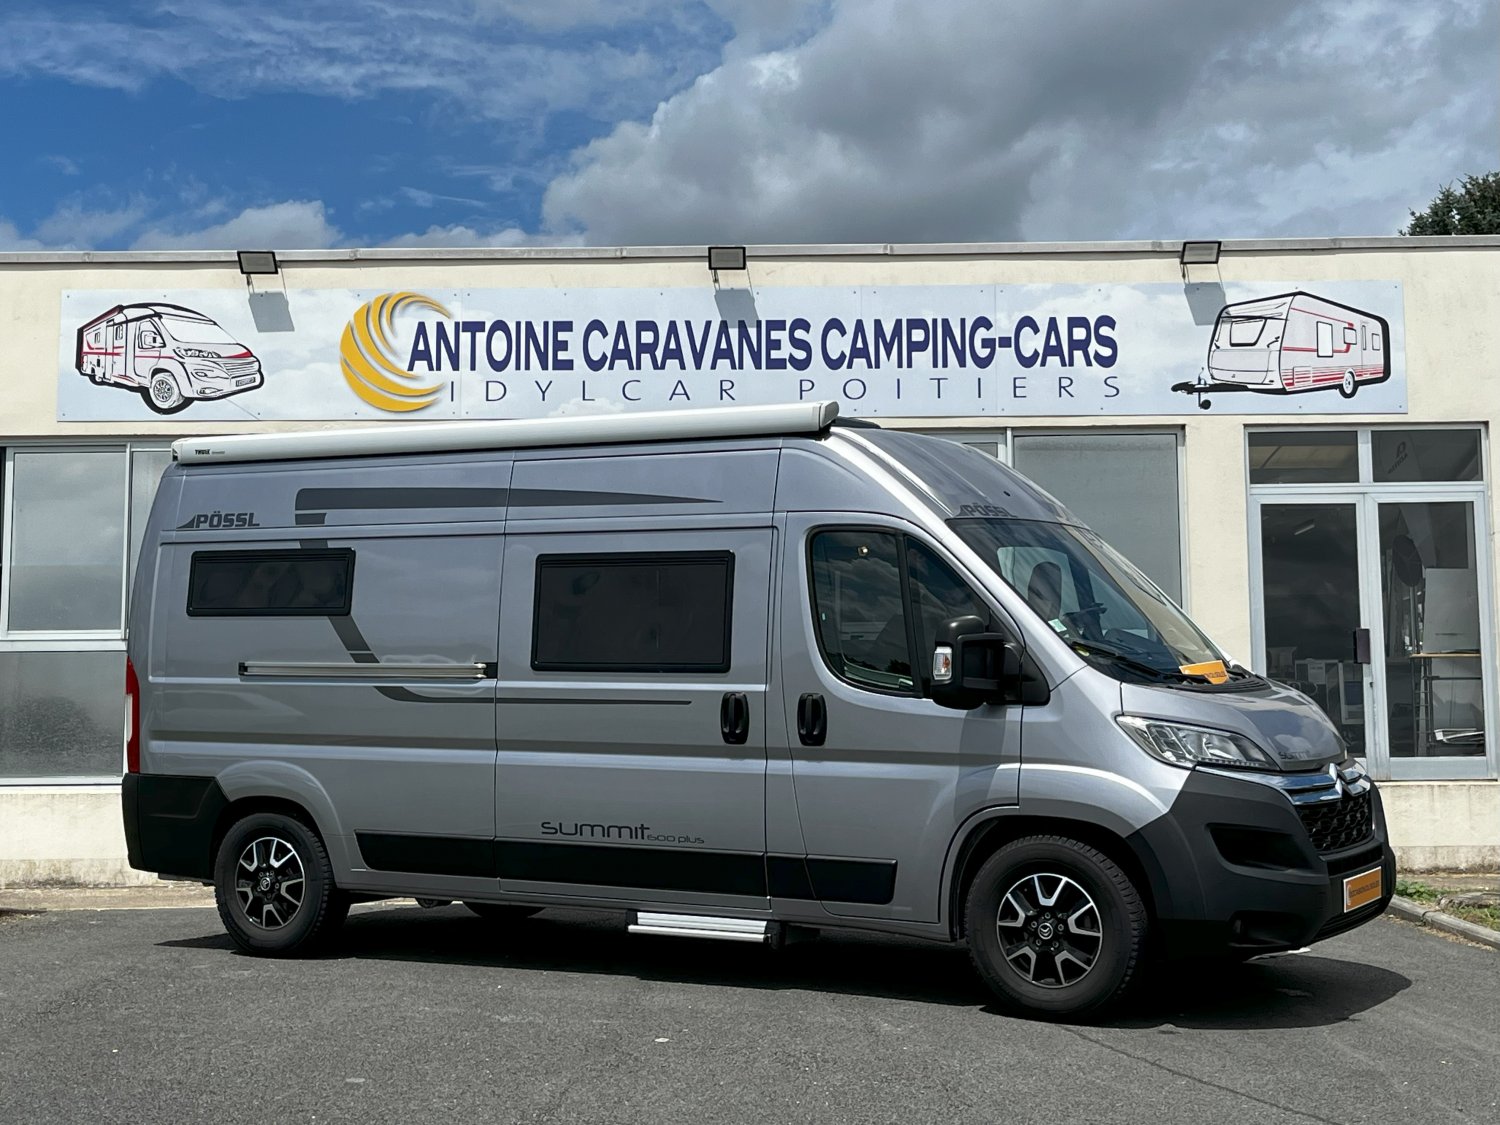 Antoine Caravanes et Camping Car - Possl Summit 600 Plus à 54 900 €